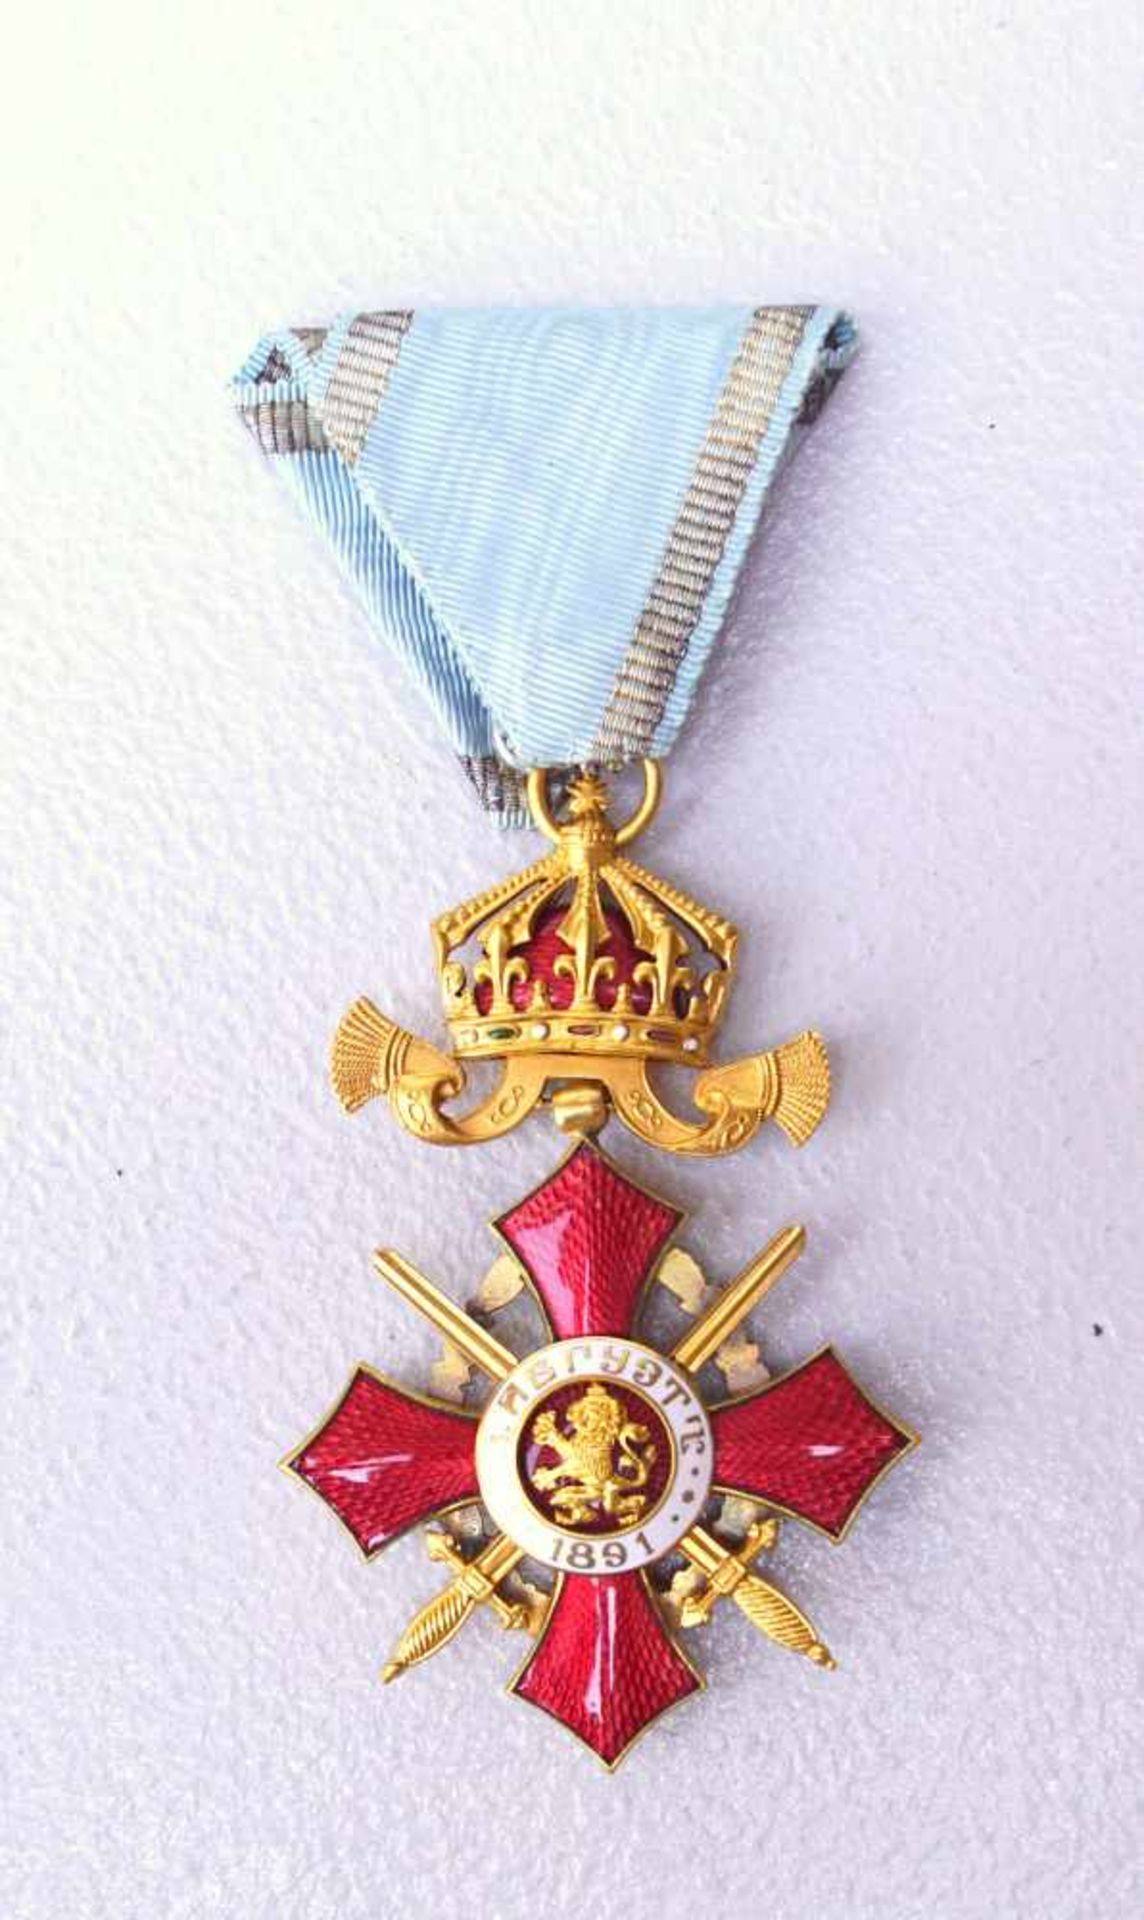 Ritterkreuz 4. Klasse - Bulgarien Militär VerdienstordenOrden Bulgarien, Militär-Verdienstorden, - Bild 2 aus 3